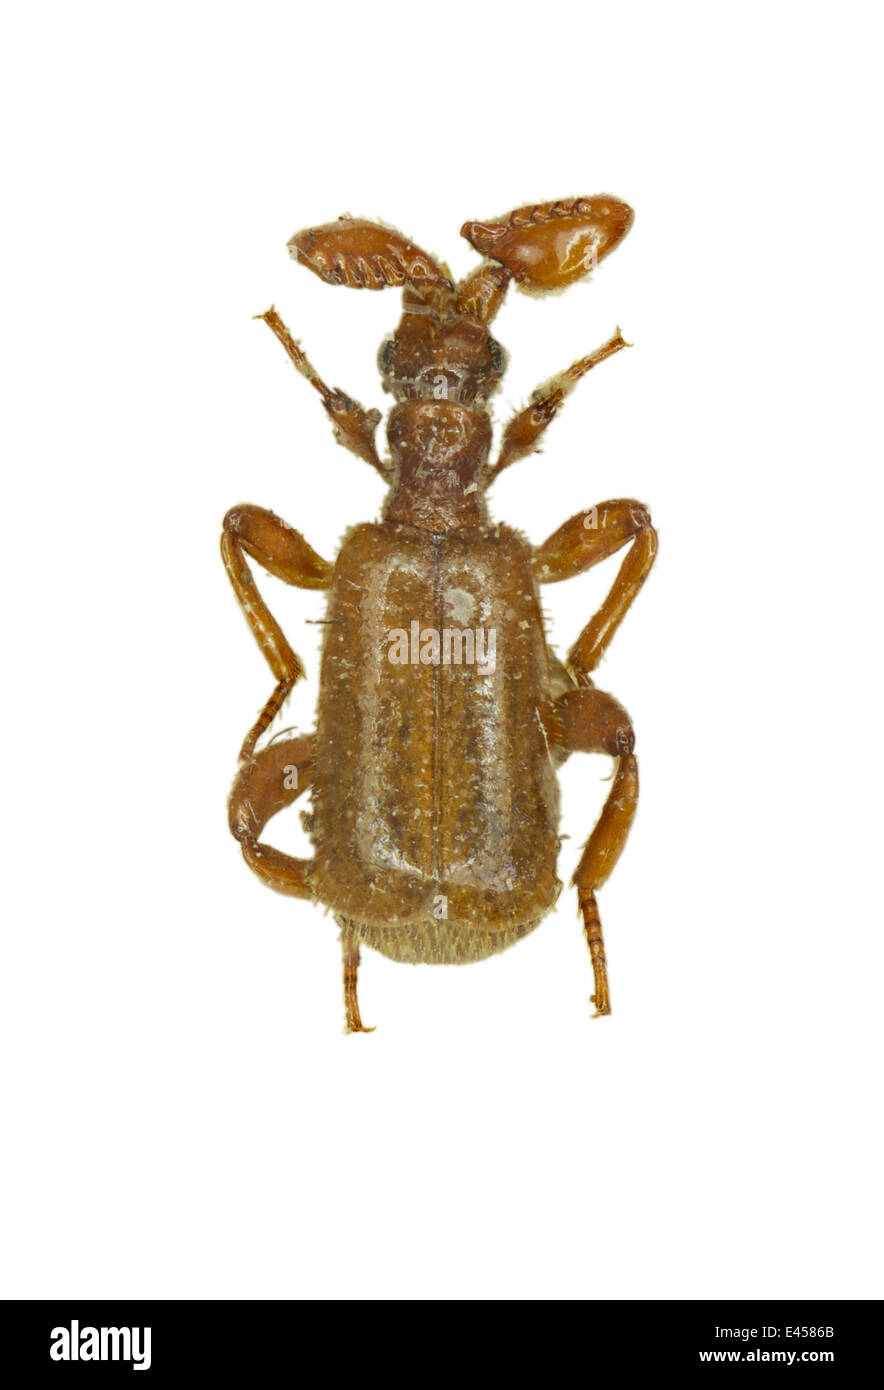 Coleoptera; Carabidae; Edaphopaussus favieri: Fairmaire 1851; Paussus favieri; Ant nest beetle Stock Photo